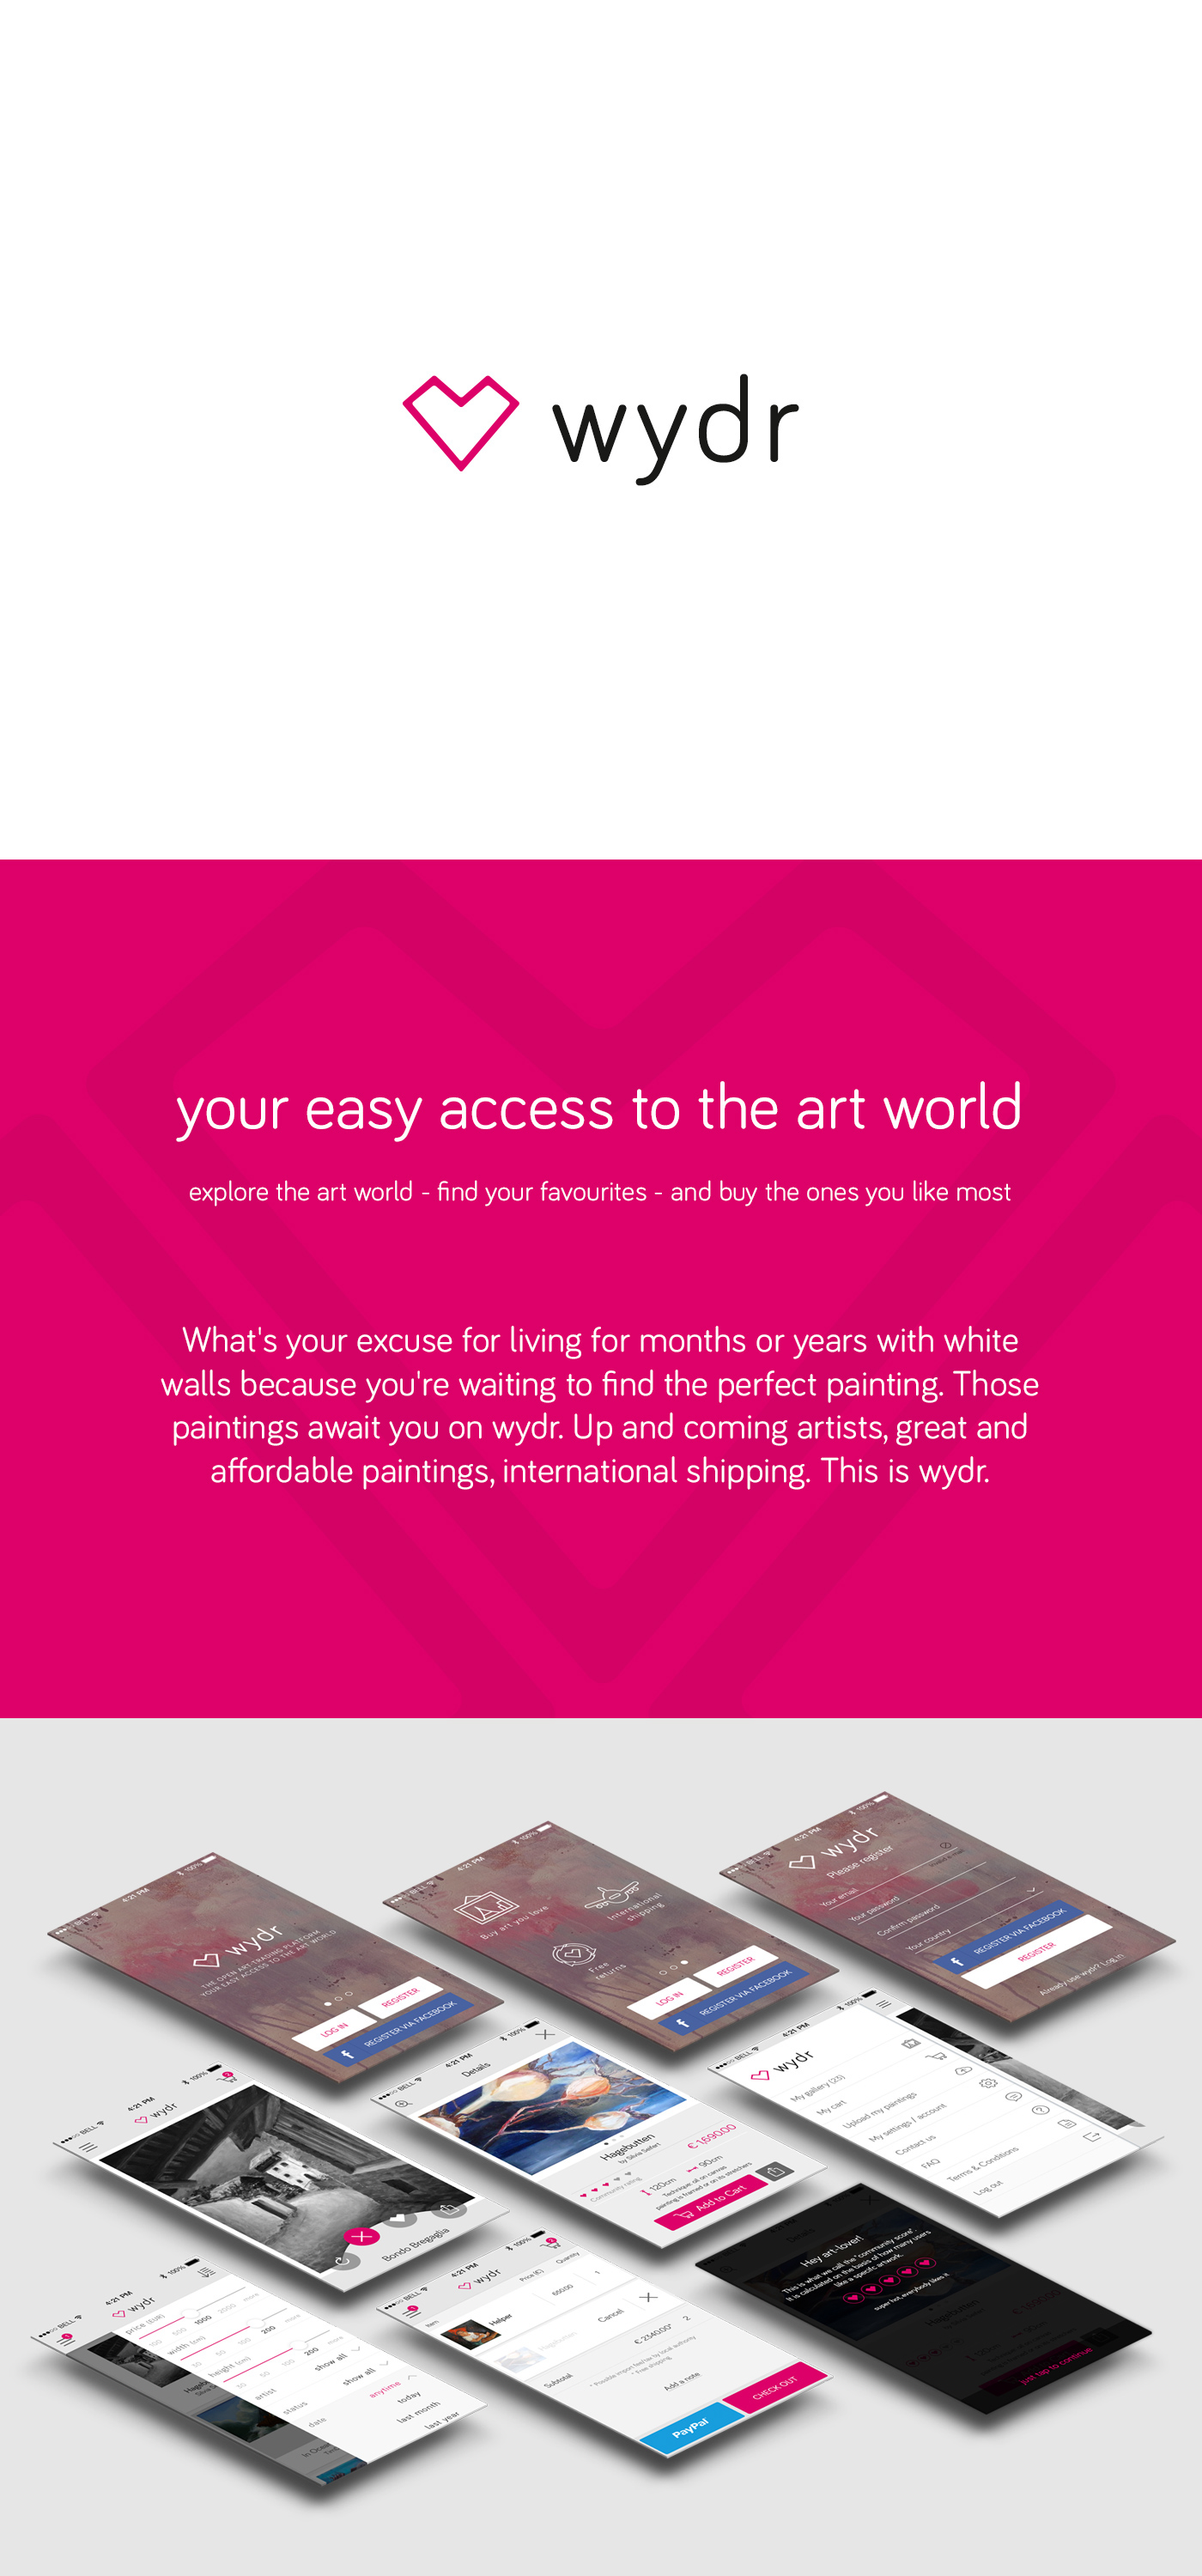 wydr art buy art artworks ios app Mobile app ux UI application user interface mobile design